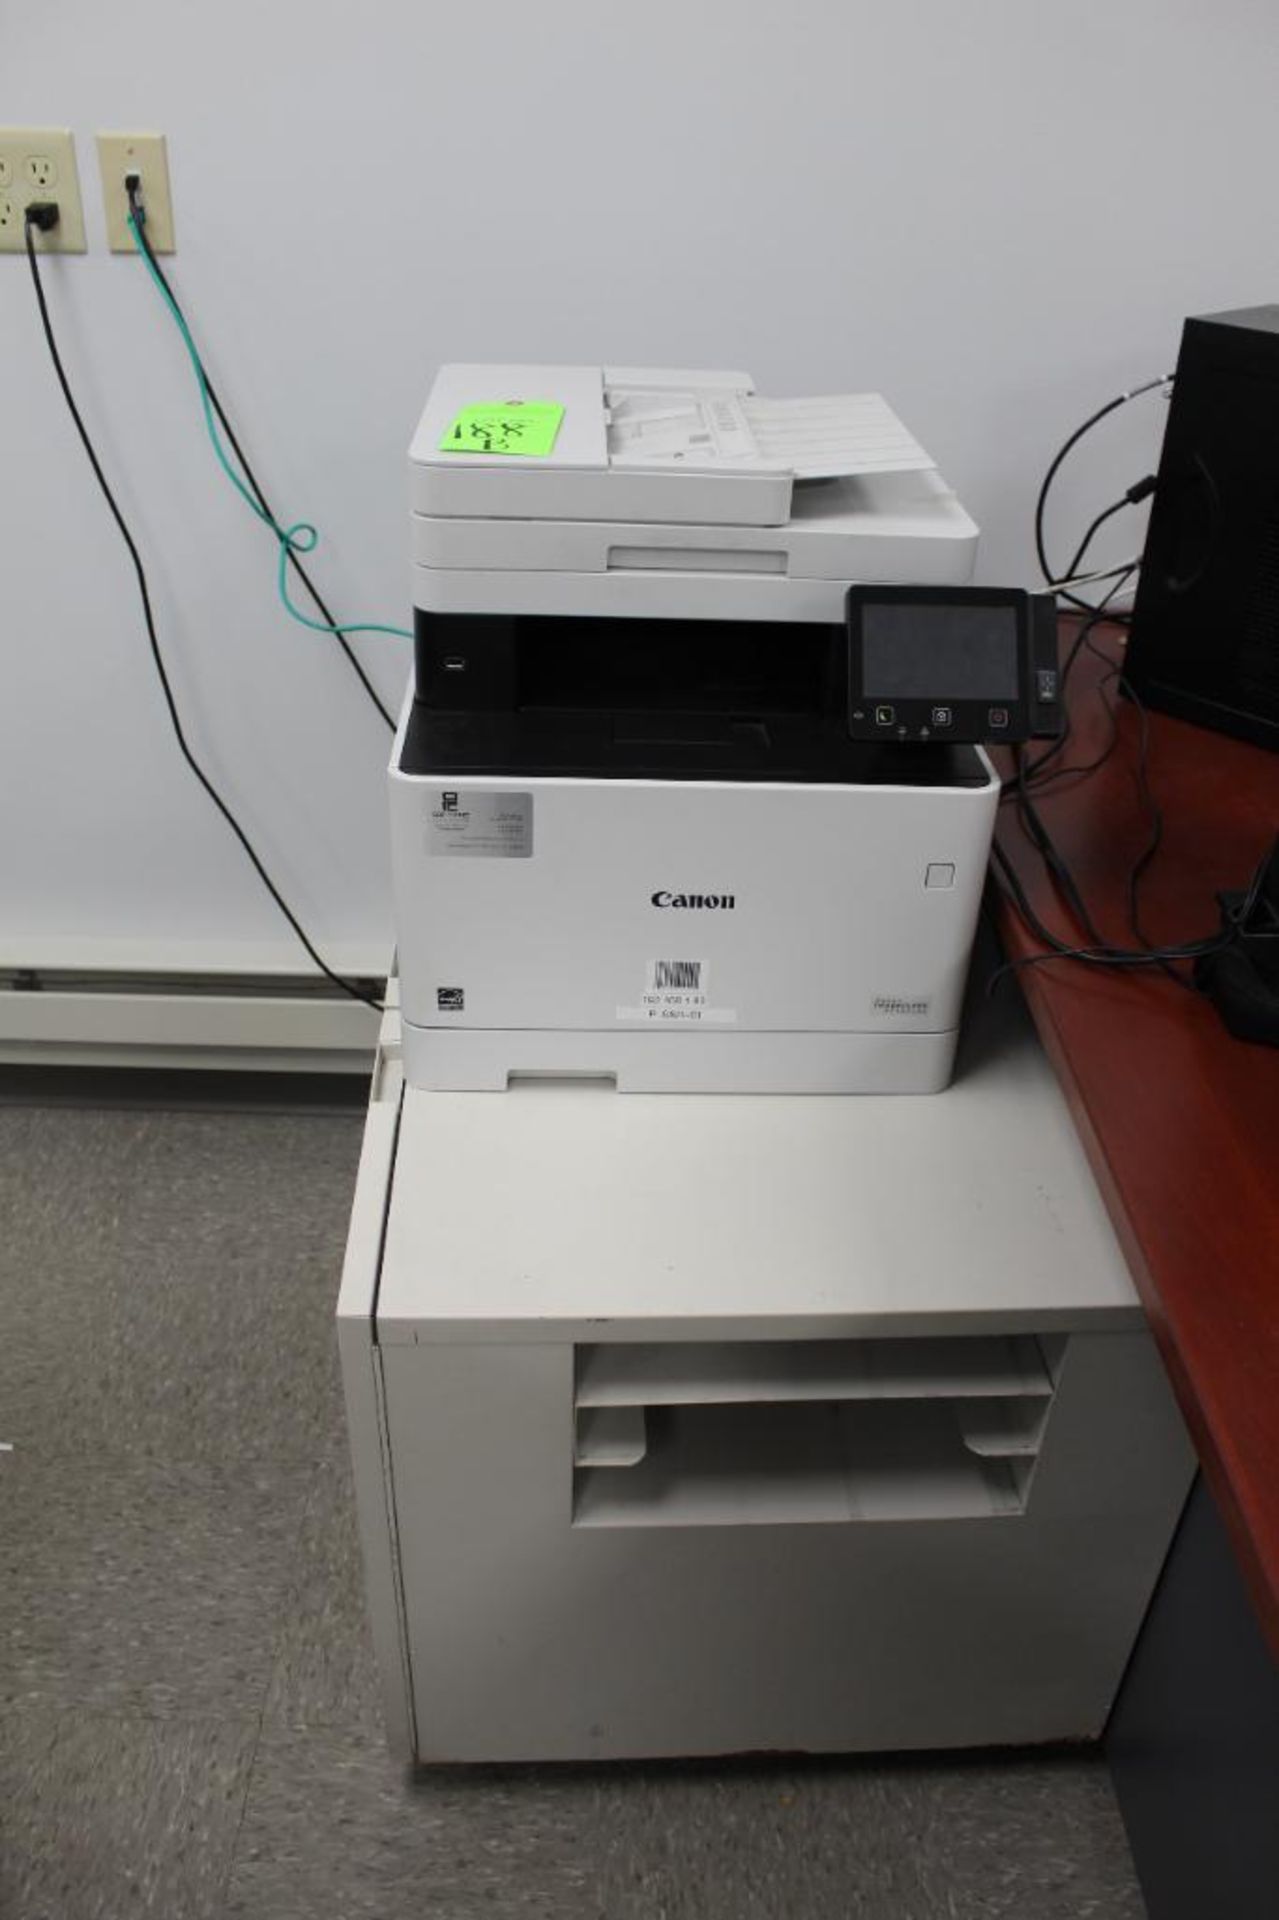 Printer with printing cart